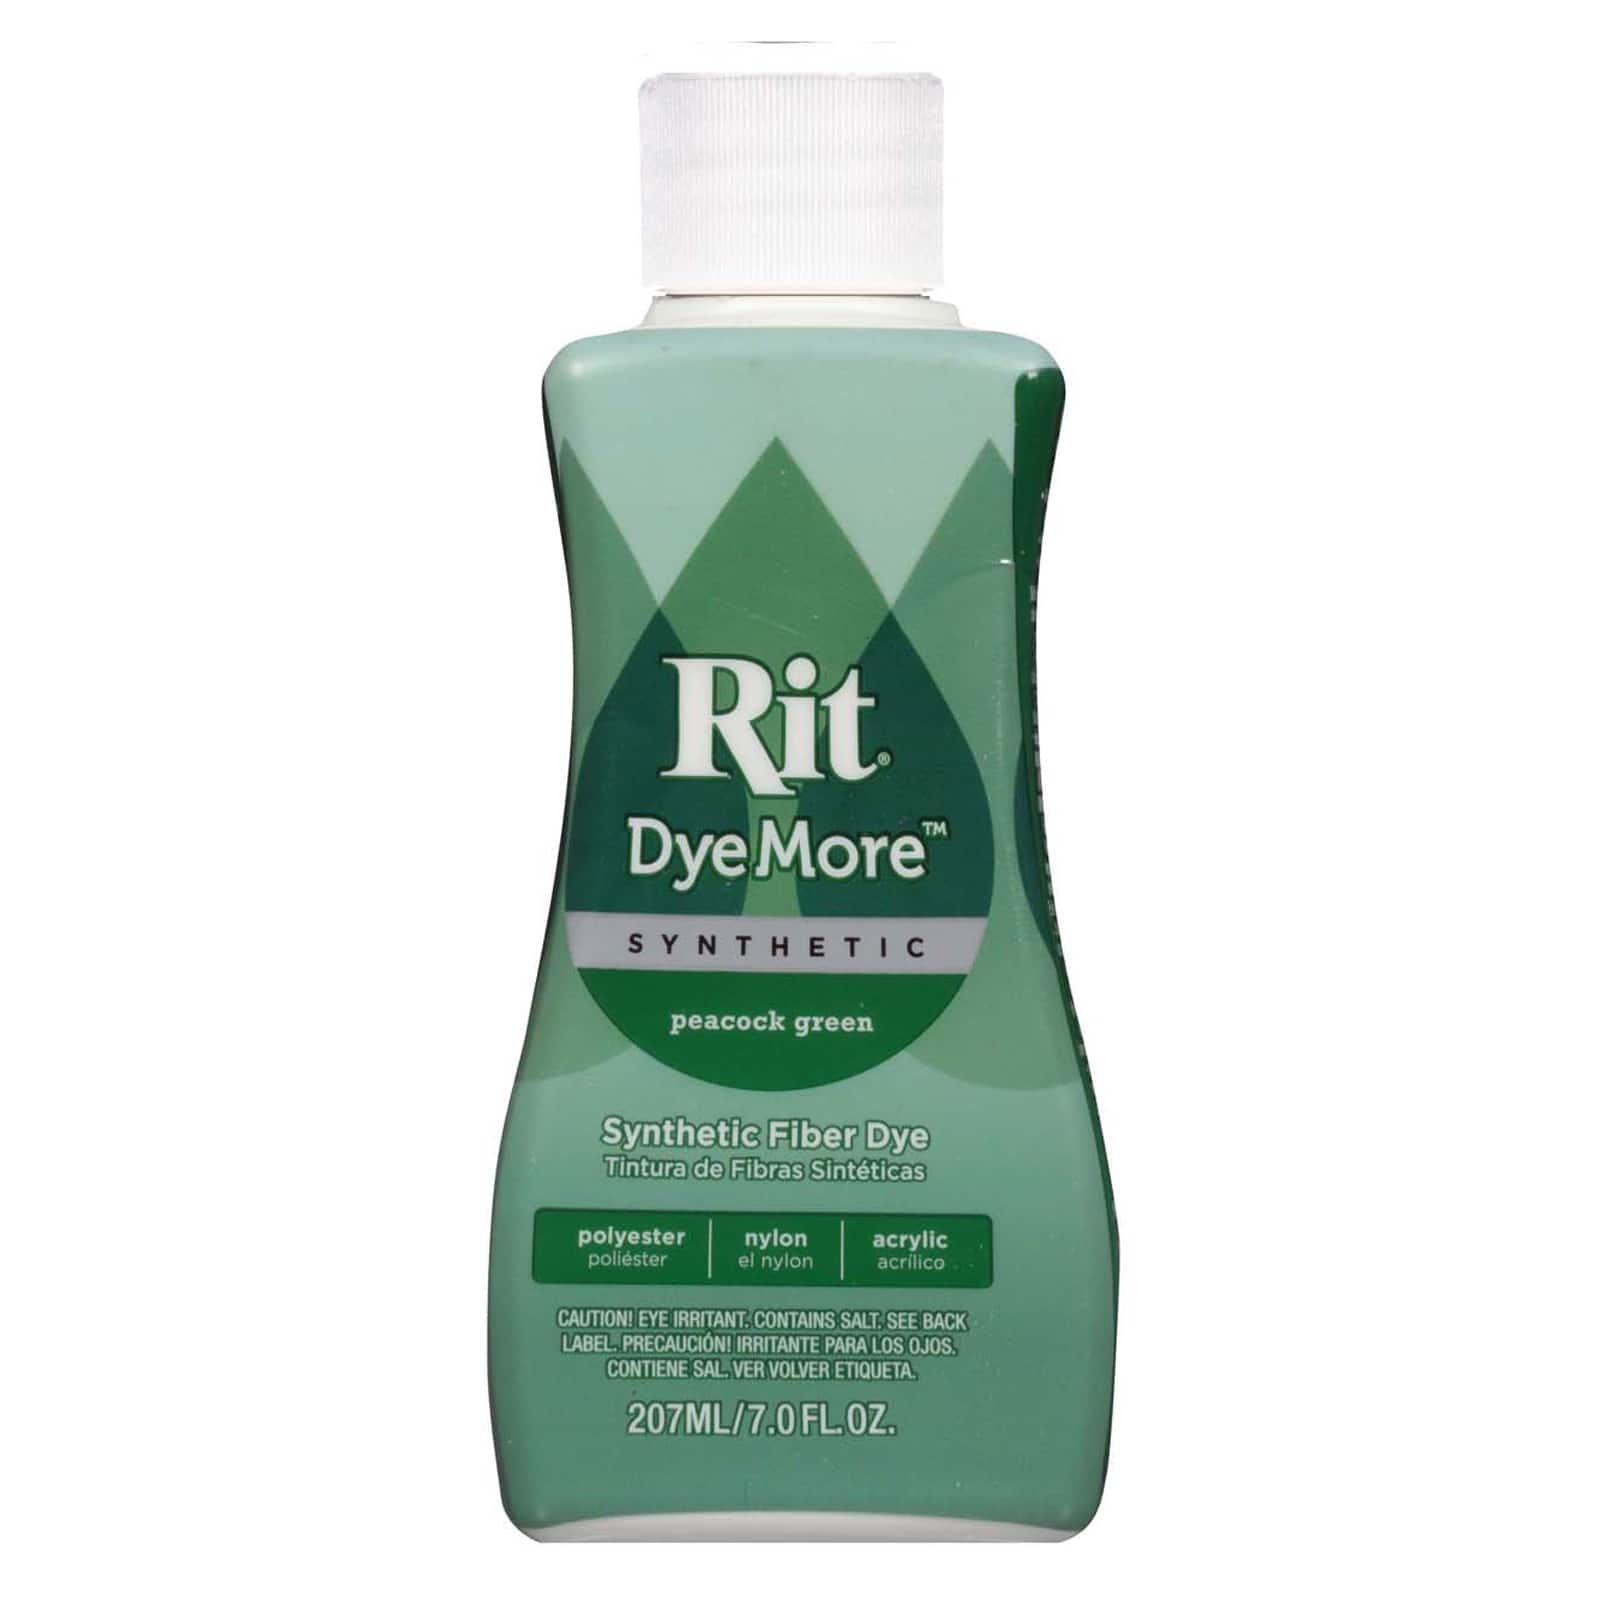 12 Pack: Rit® All Purpose Liquid Dye